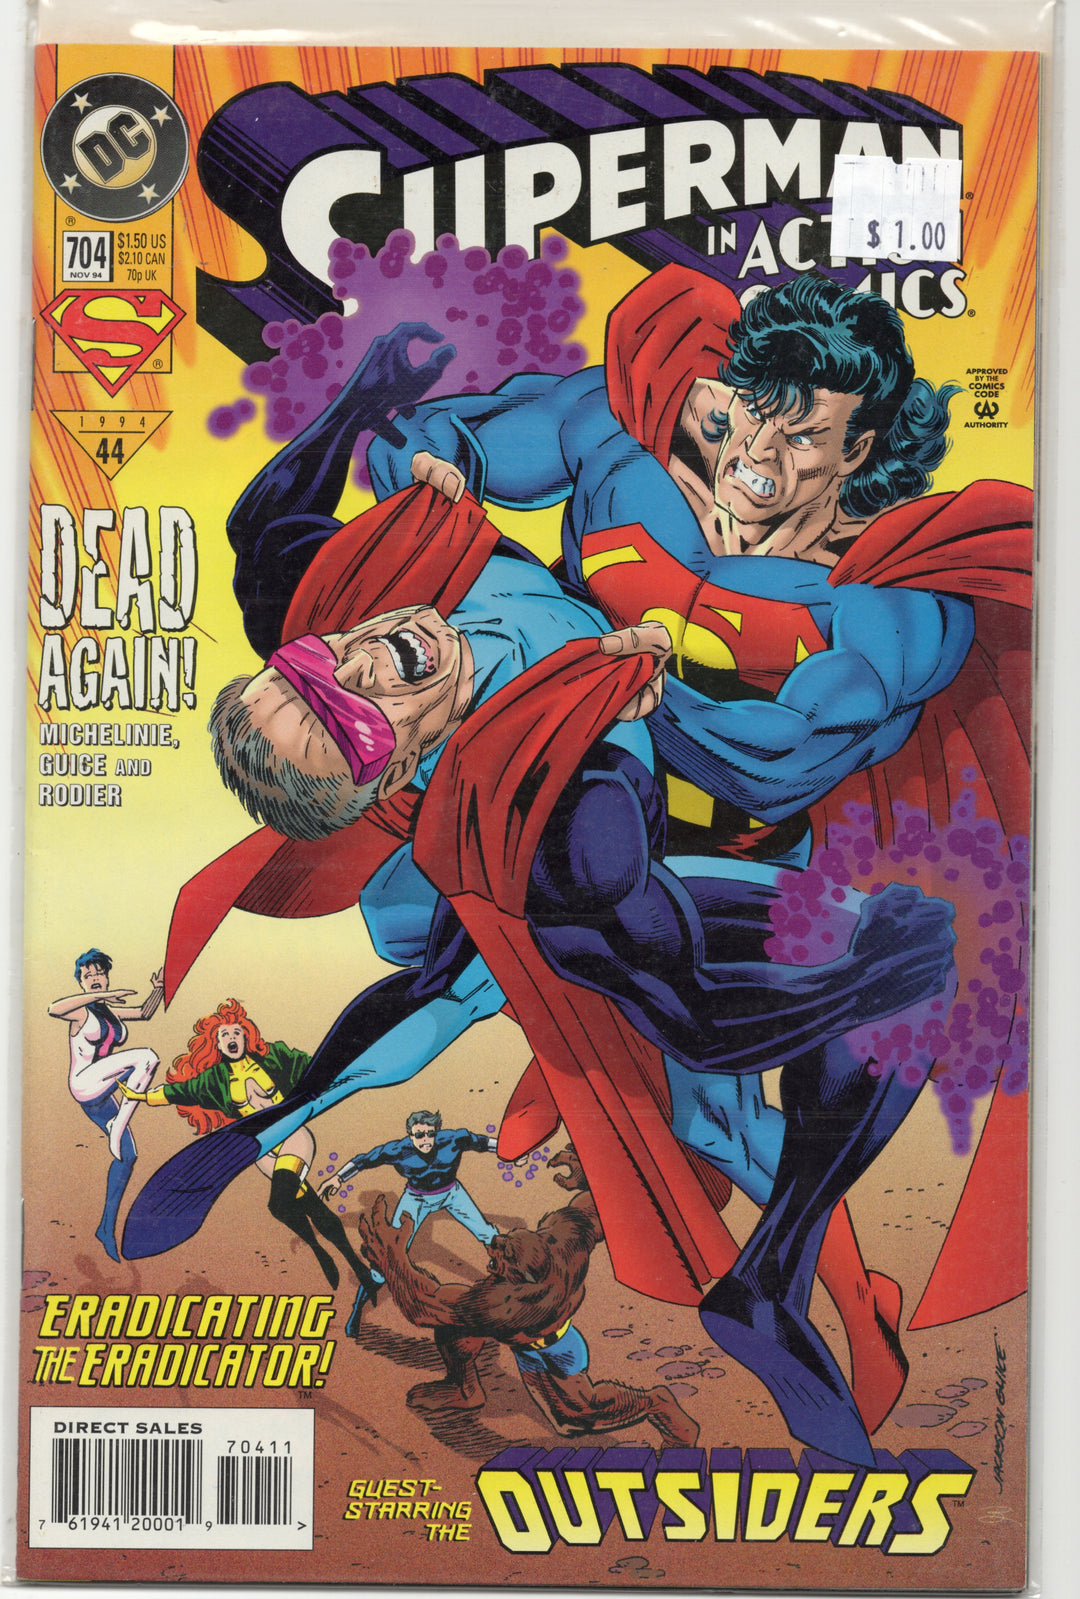 Superman Action Comics #704